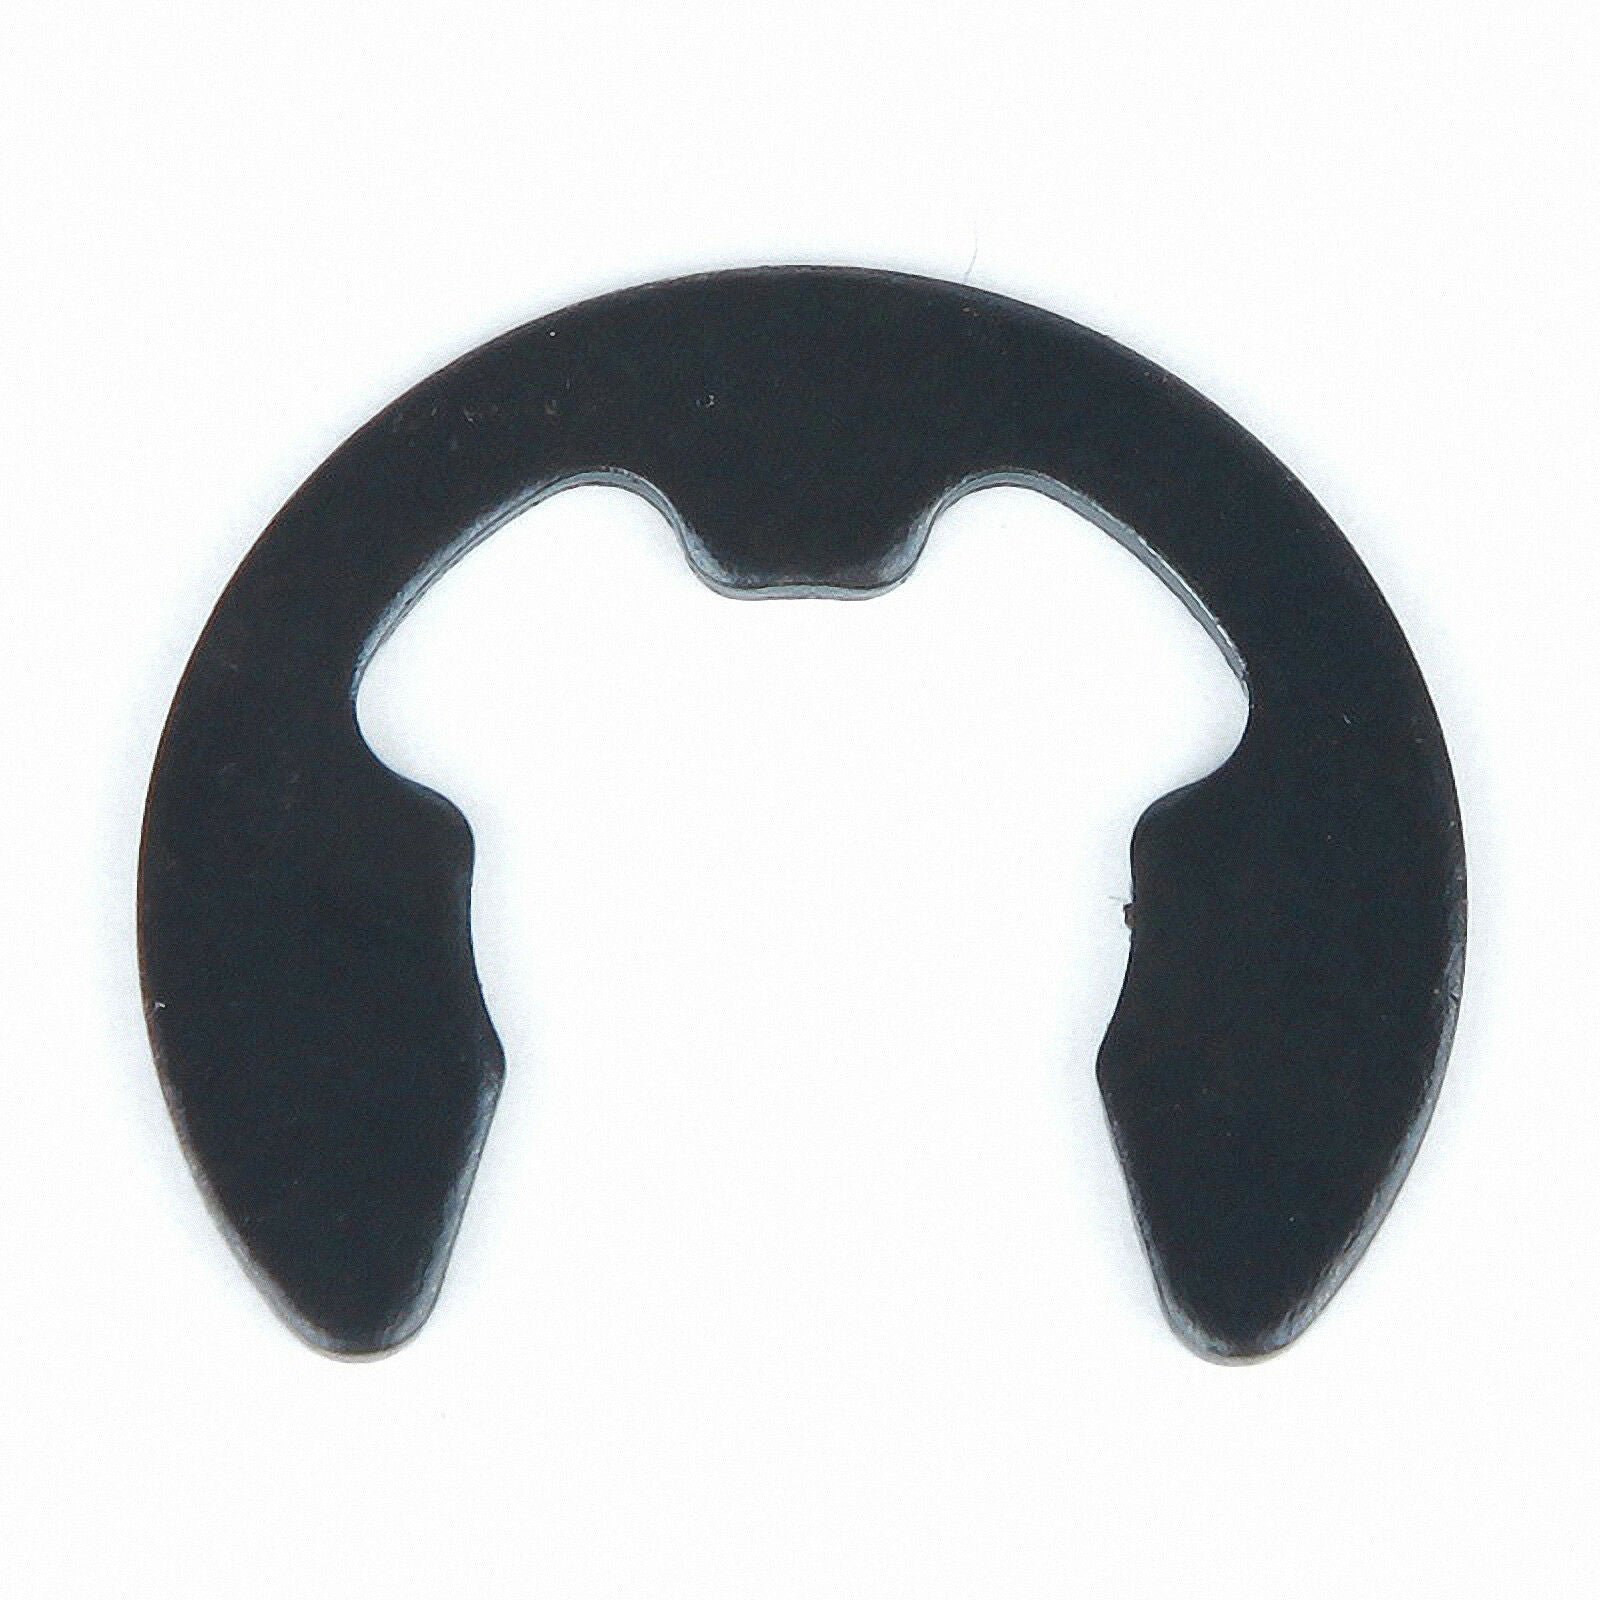 80pc M1.5,2,2.5~6 E-Clips Snap Ring Circlips Retaining Kit - Black Zinc Plated